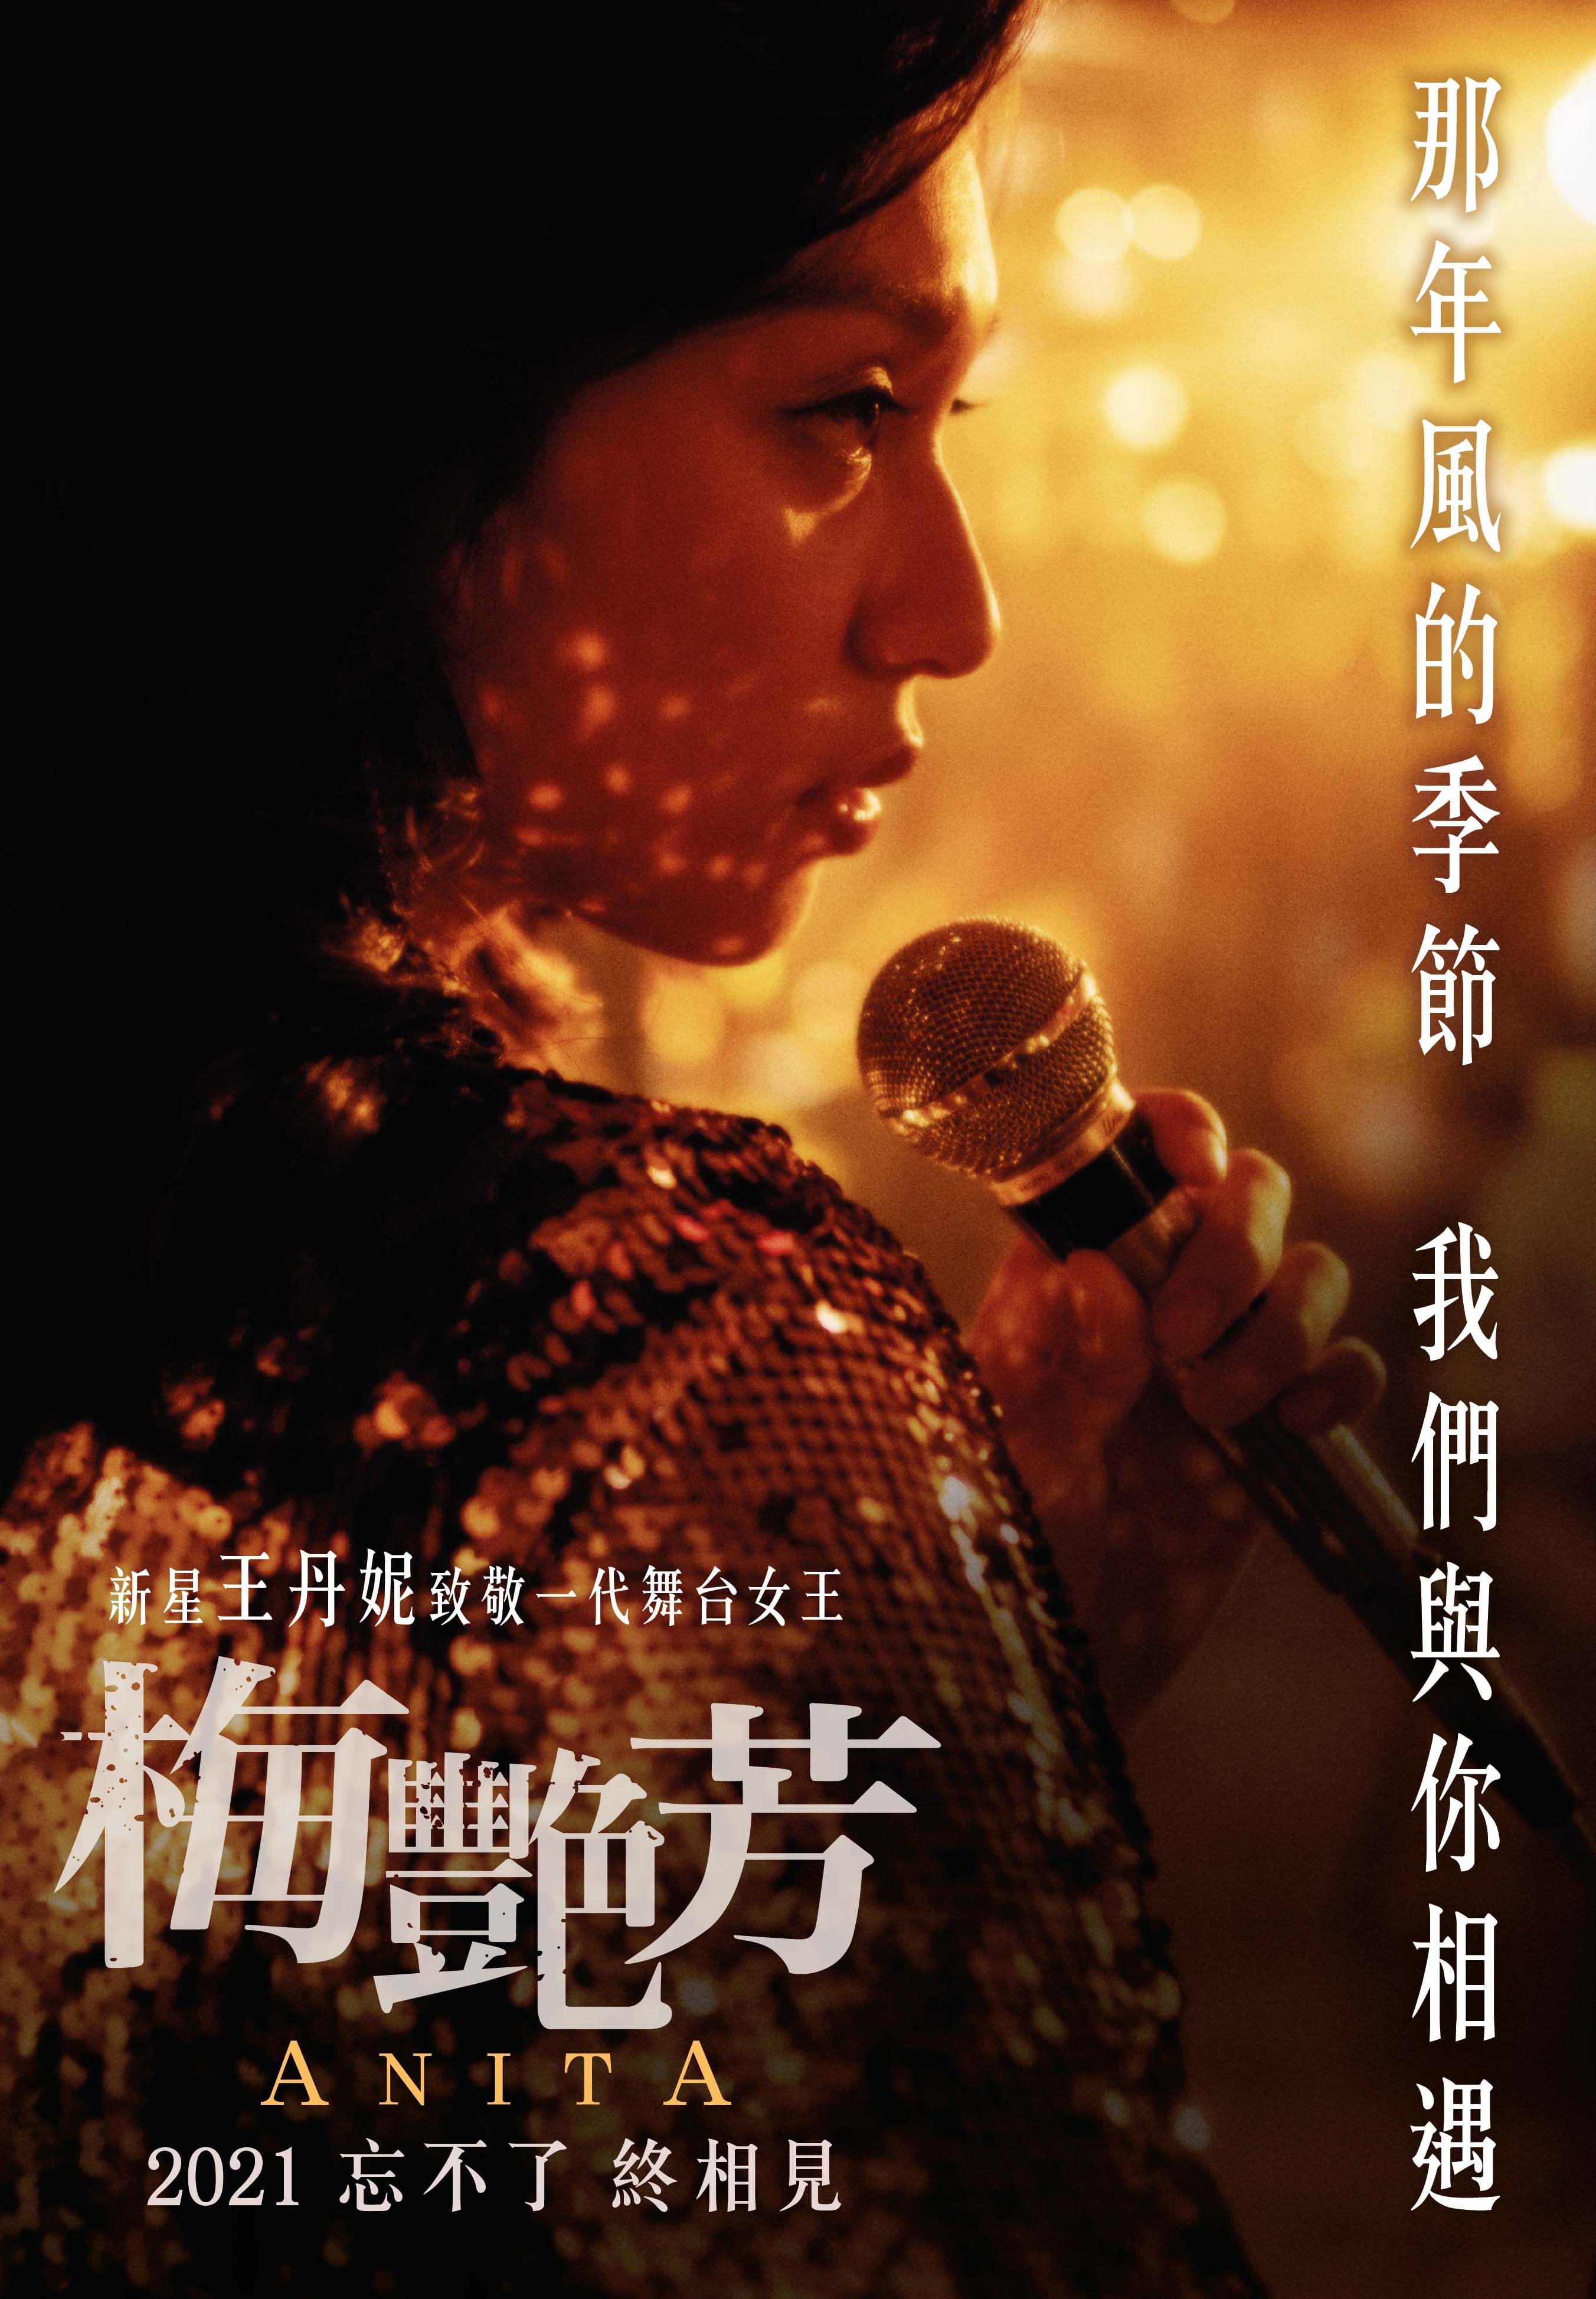 Model Louise Wong plays Canto-pop star Anita Mui in the upcoming biopic Anita.